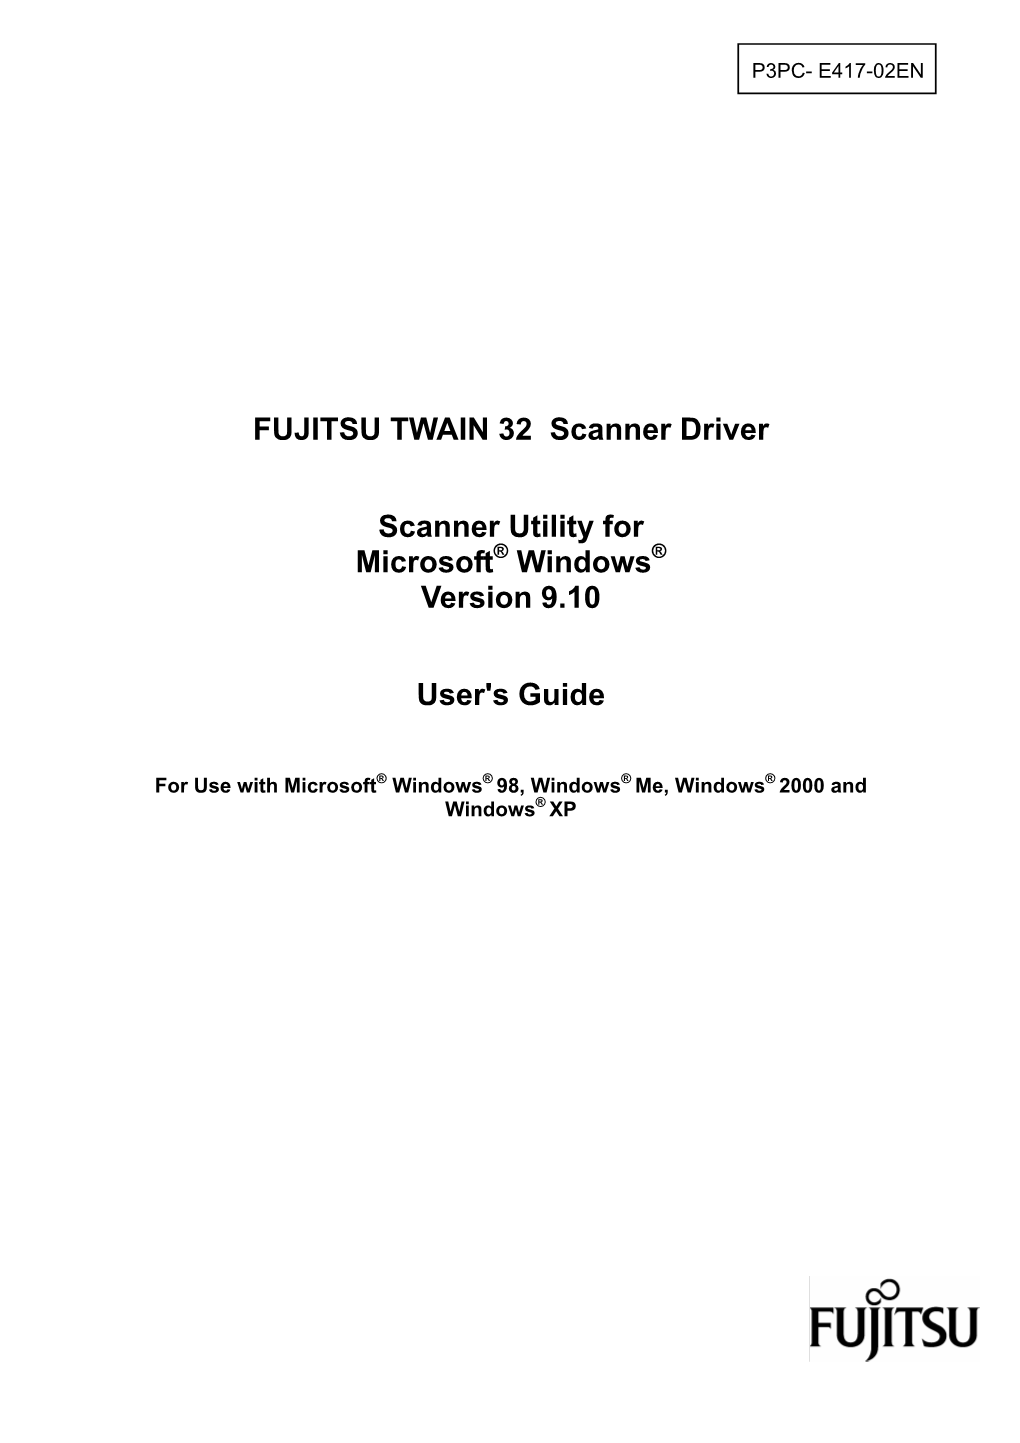 FUJITSU TWAIN 32 Scanner Driver Scanner Utility for Microsoft